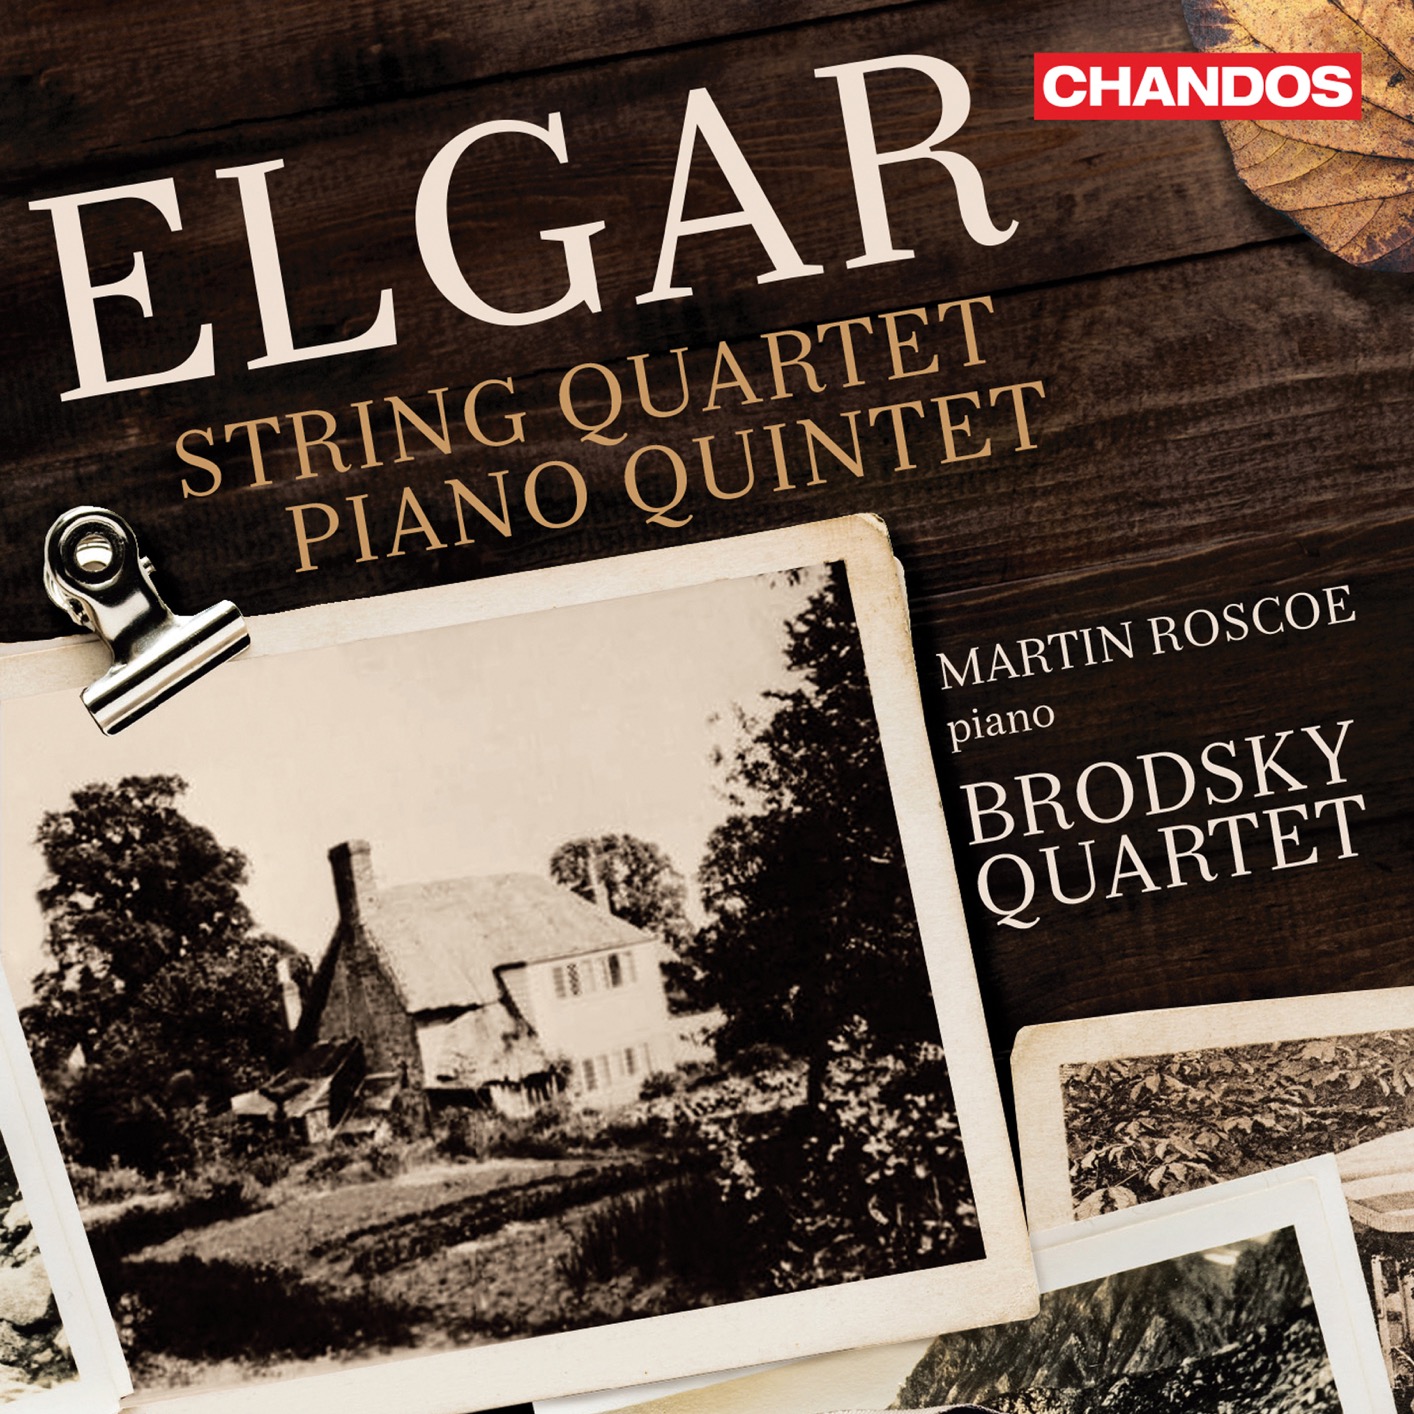 Martin Roscoe & Brodsky Quartet - Elgar: String Quartet in E Minor & Piano Quintet in A Minor (2019) [FLAC 24bit/96kHz]